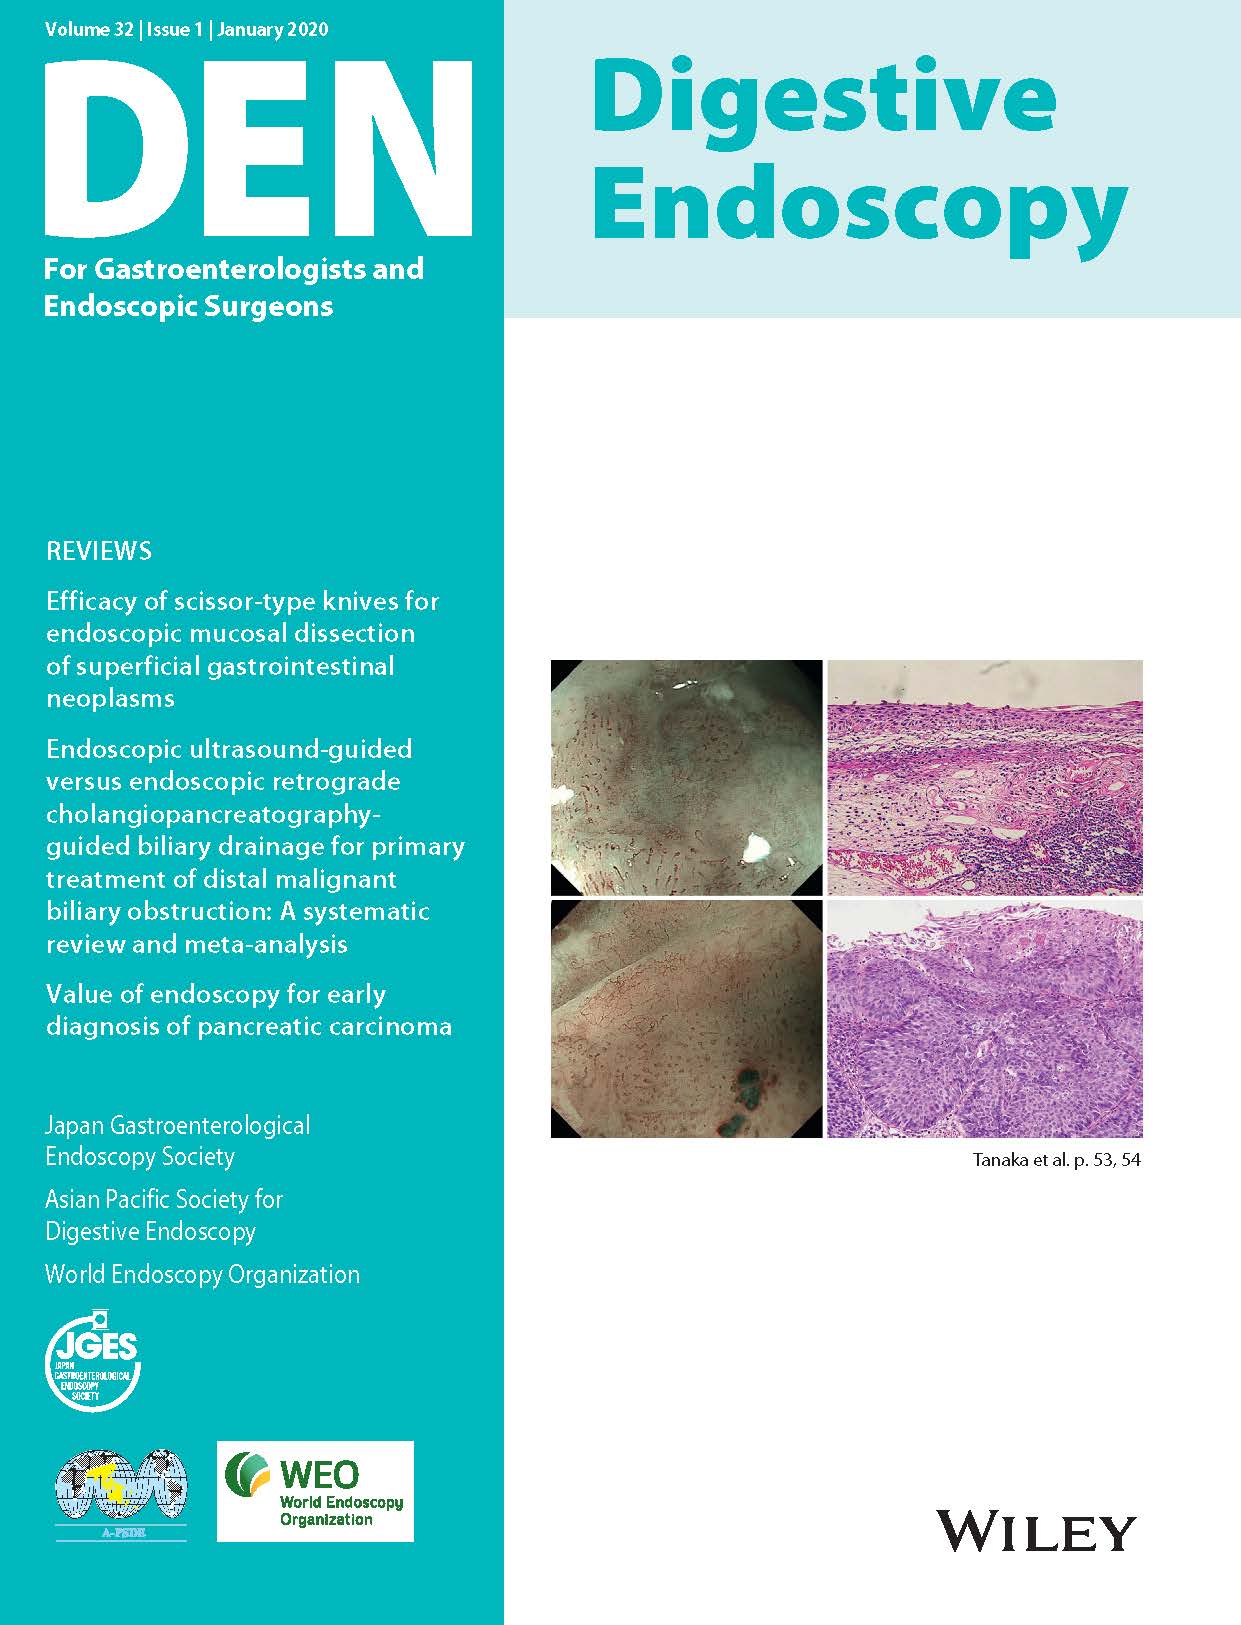 Digestive Endoscopy Vol32-1